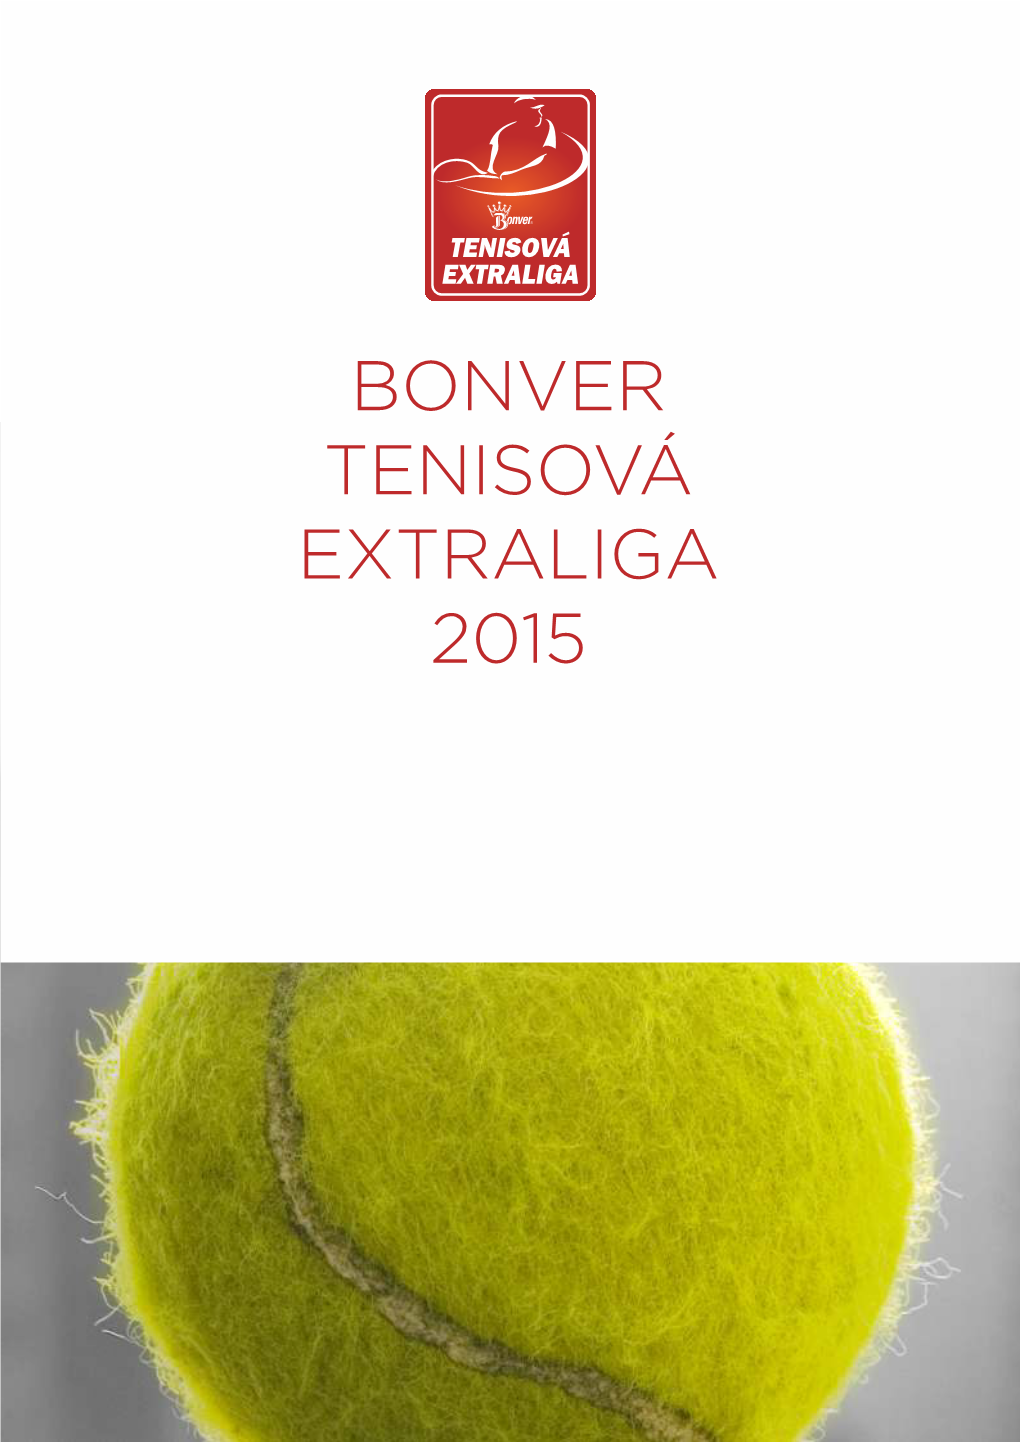 Bonver Tenisová Extraliga 2015 Tenisová Slovo Organizátora Extraliga